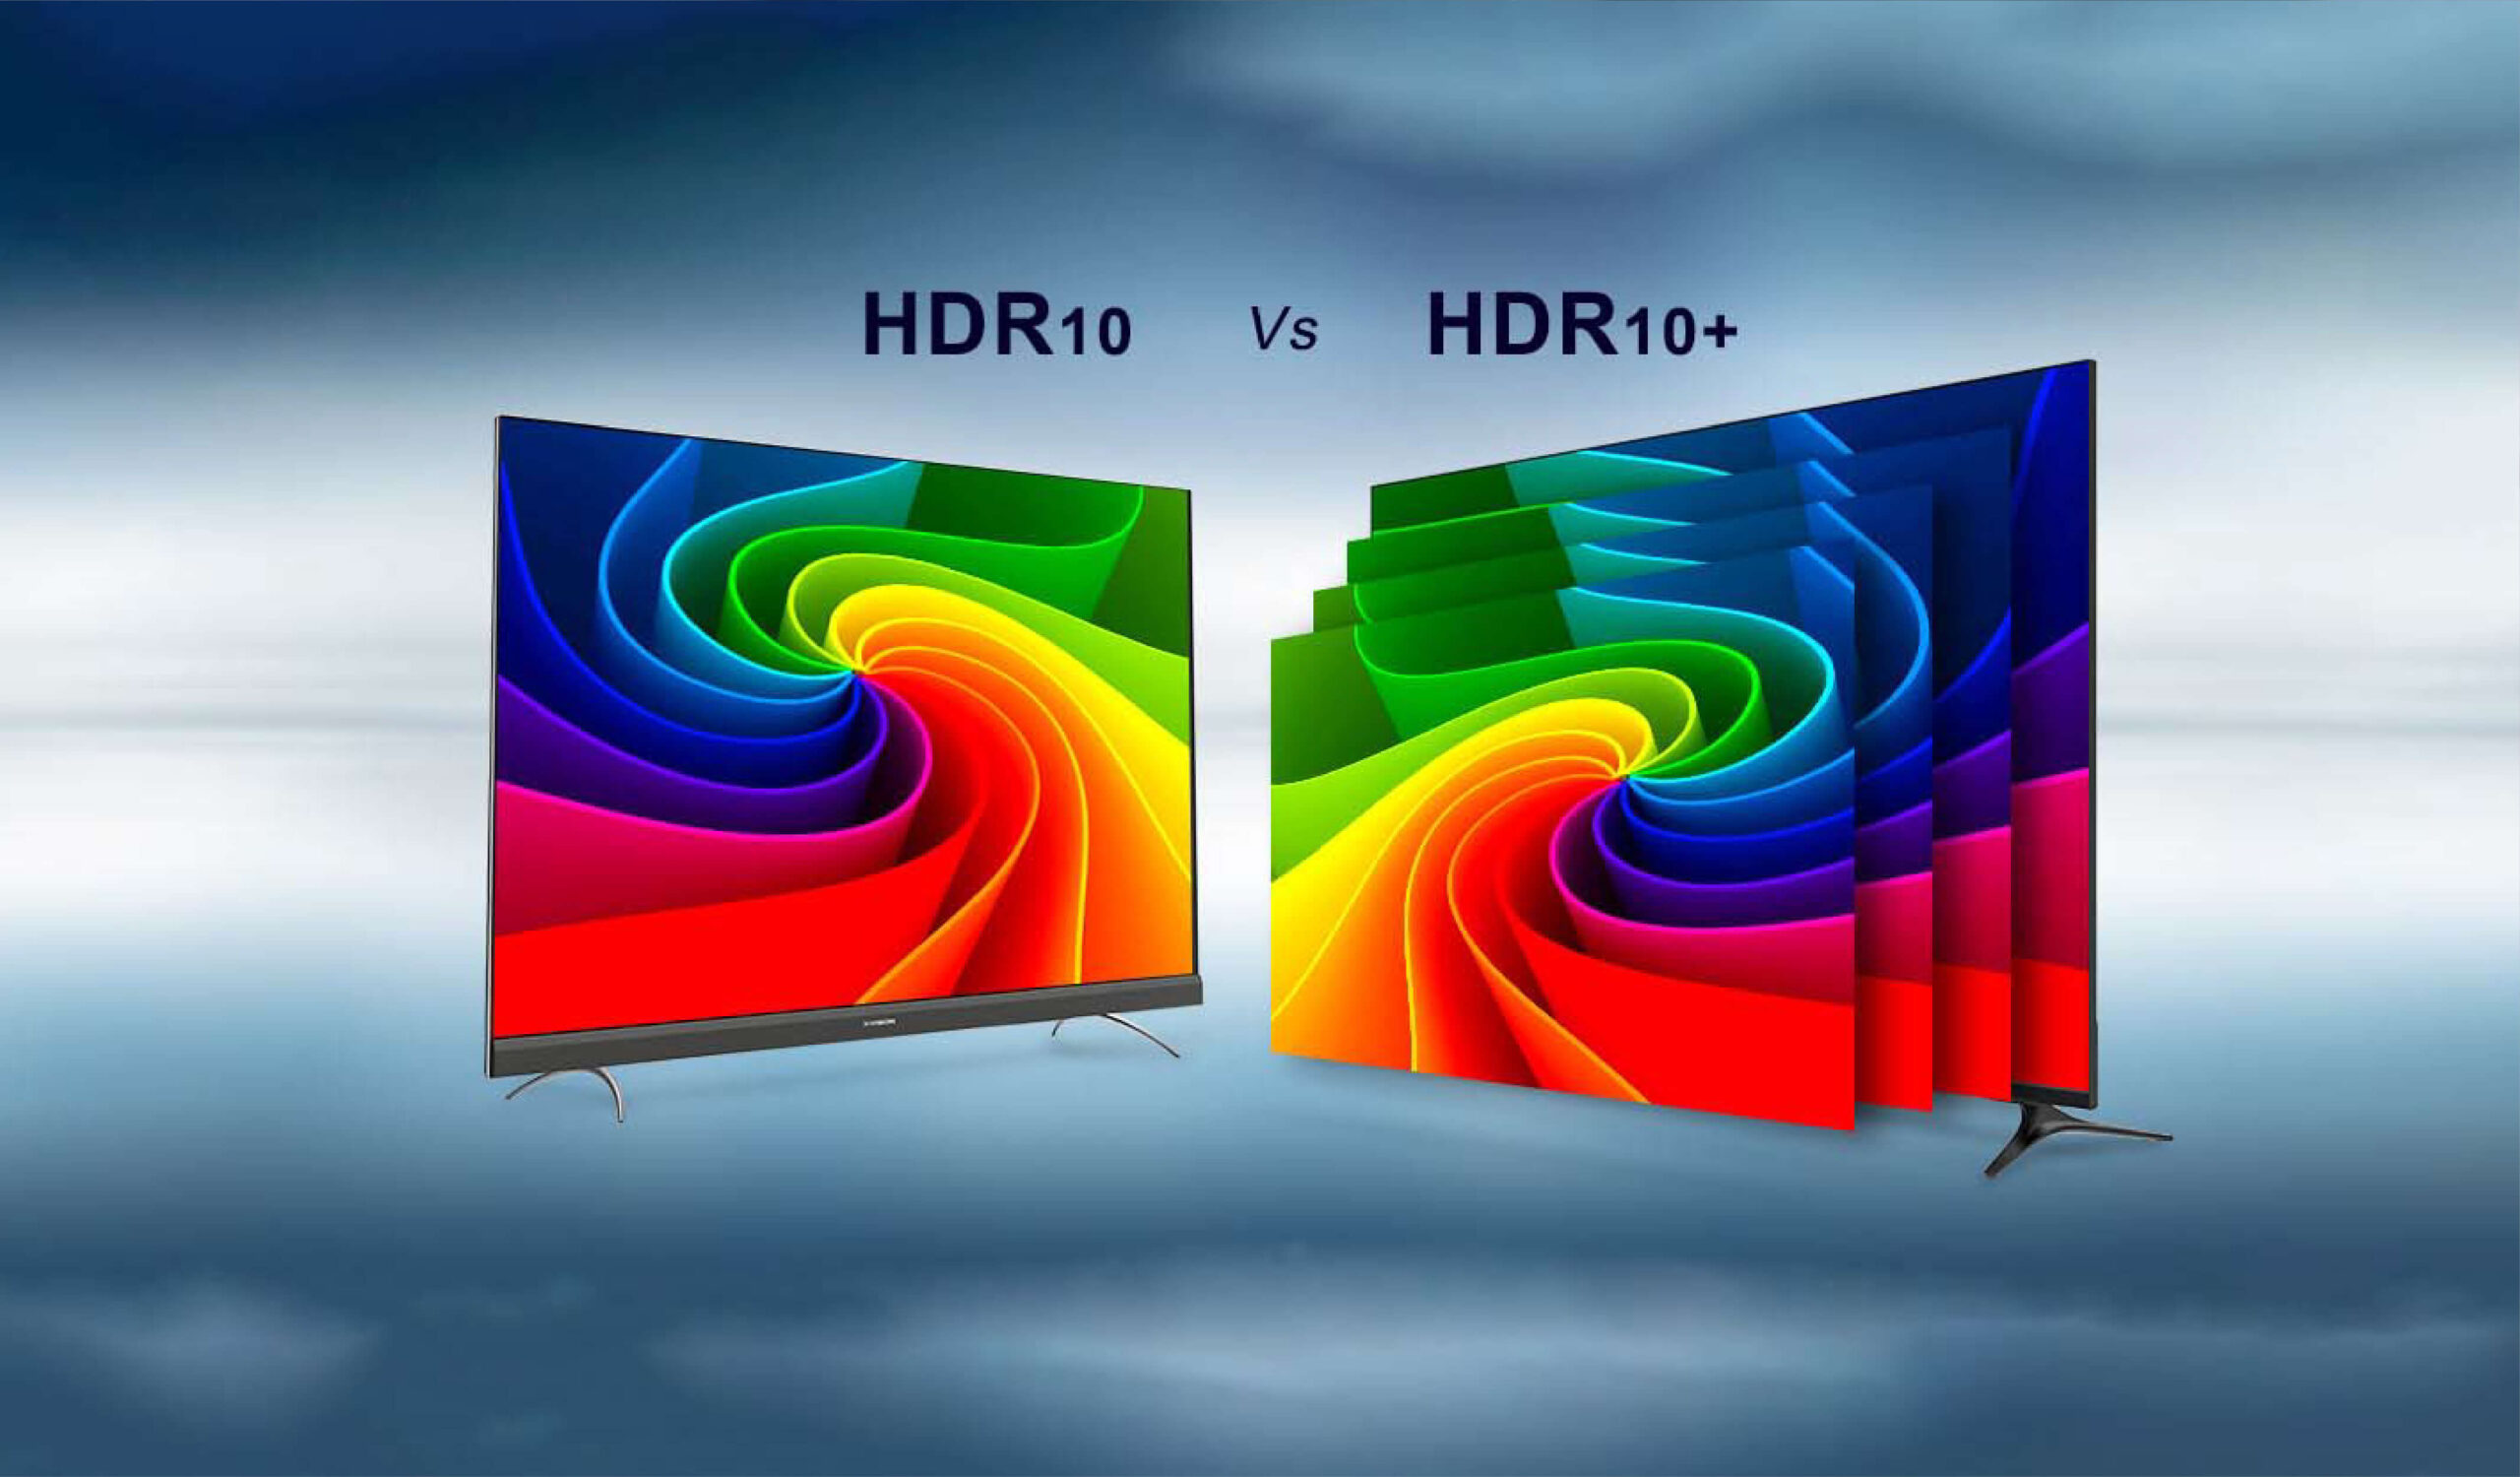 HDR10 vs HDR10+